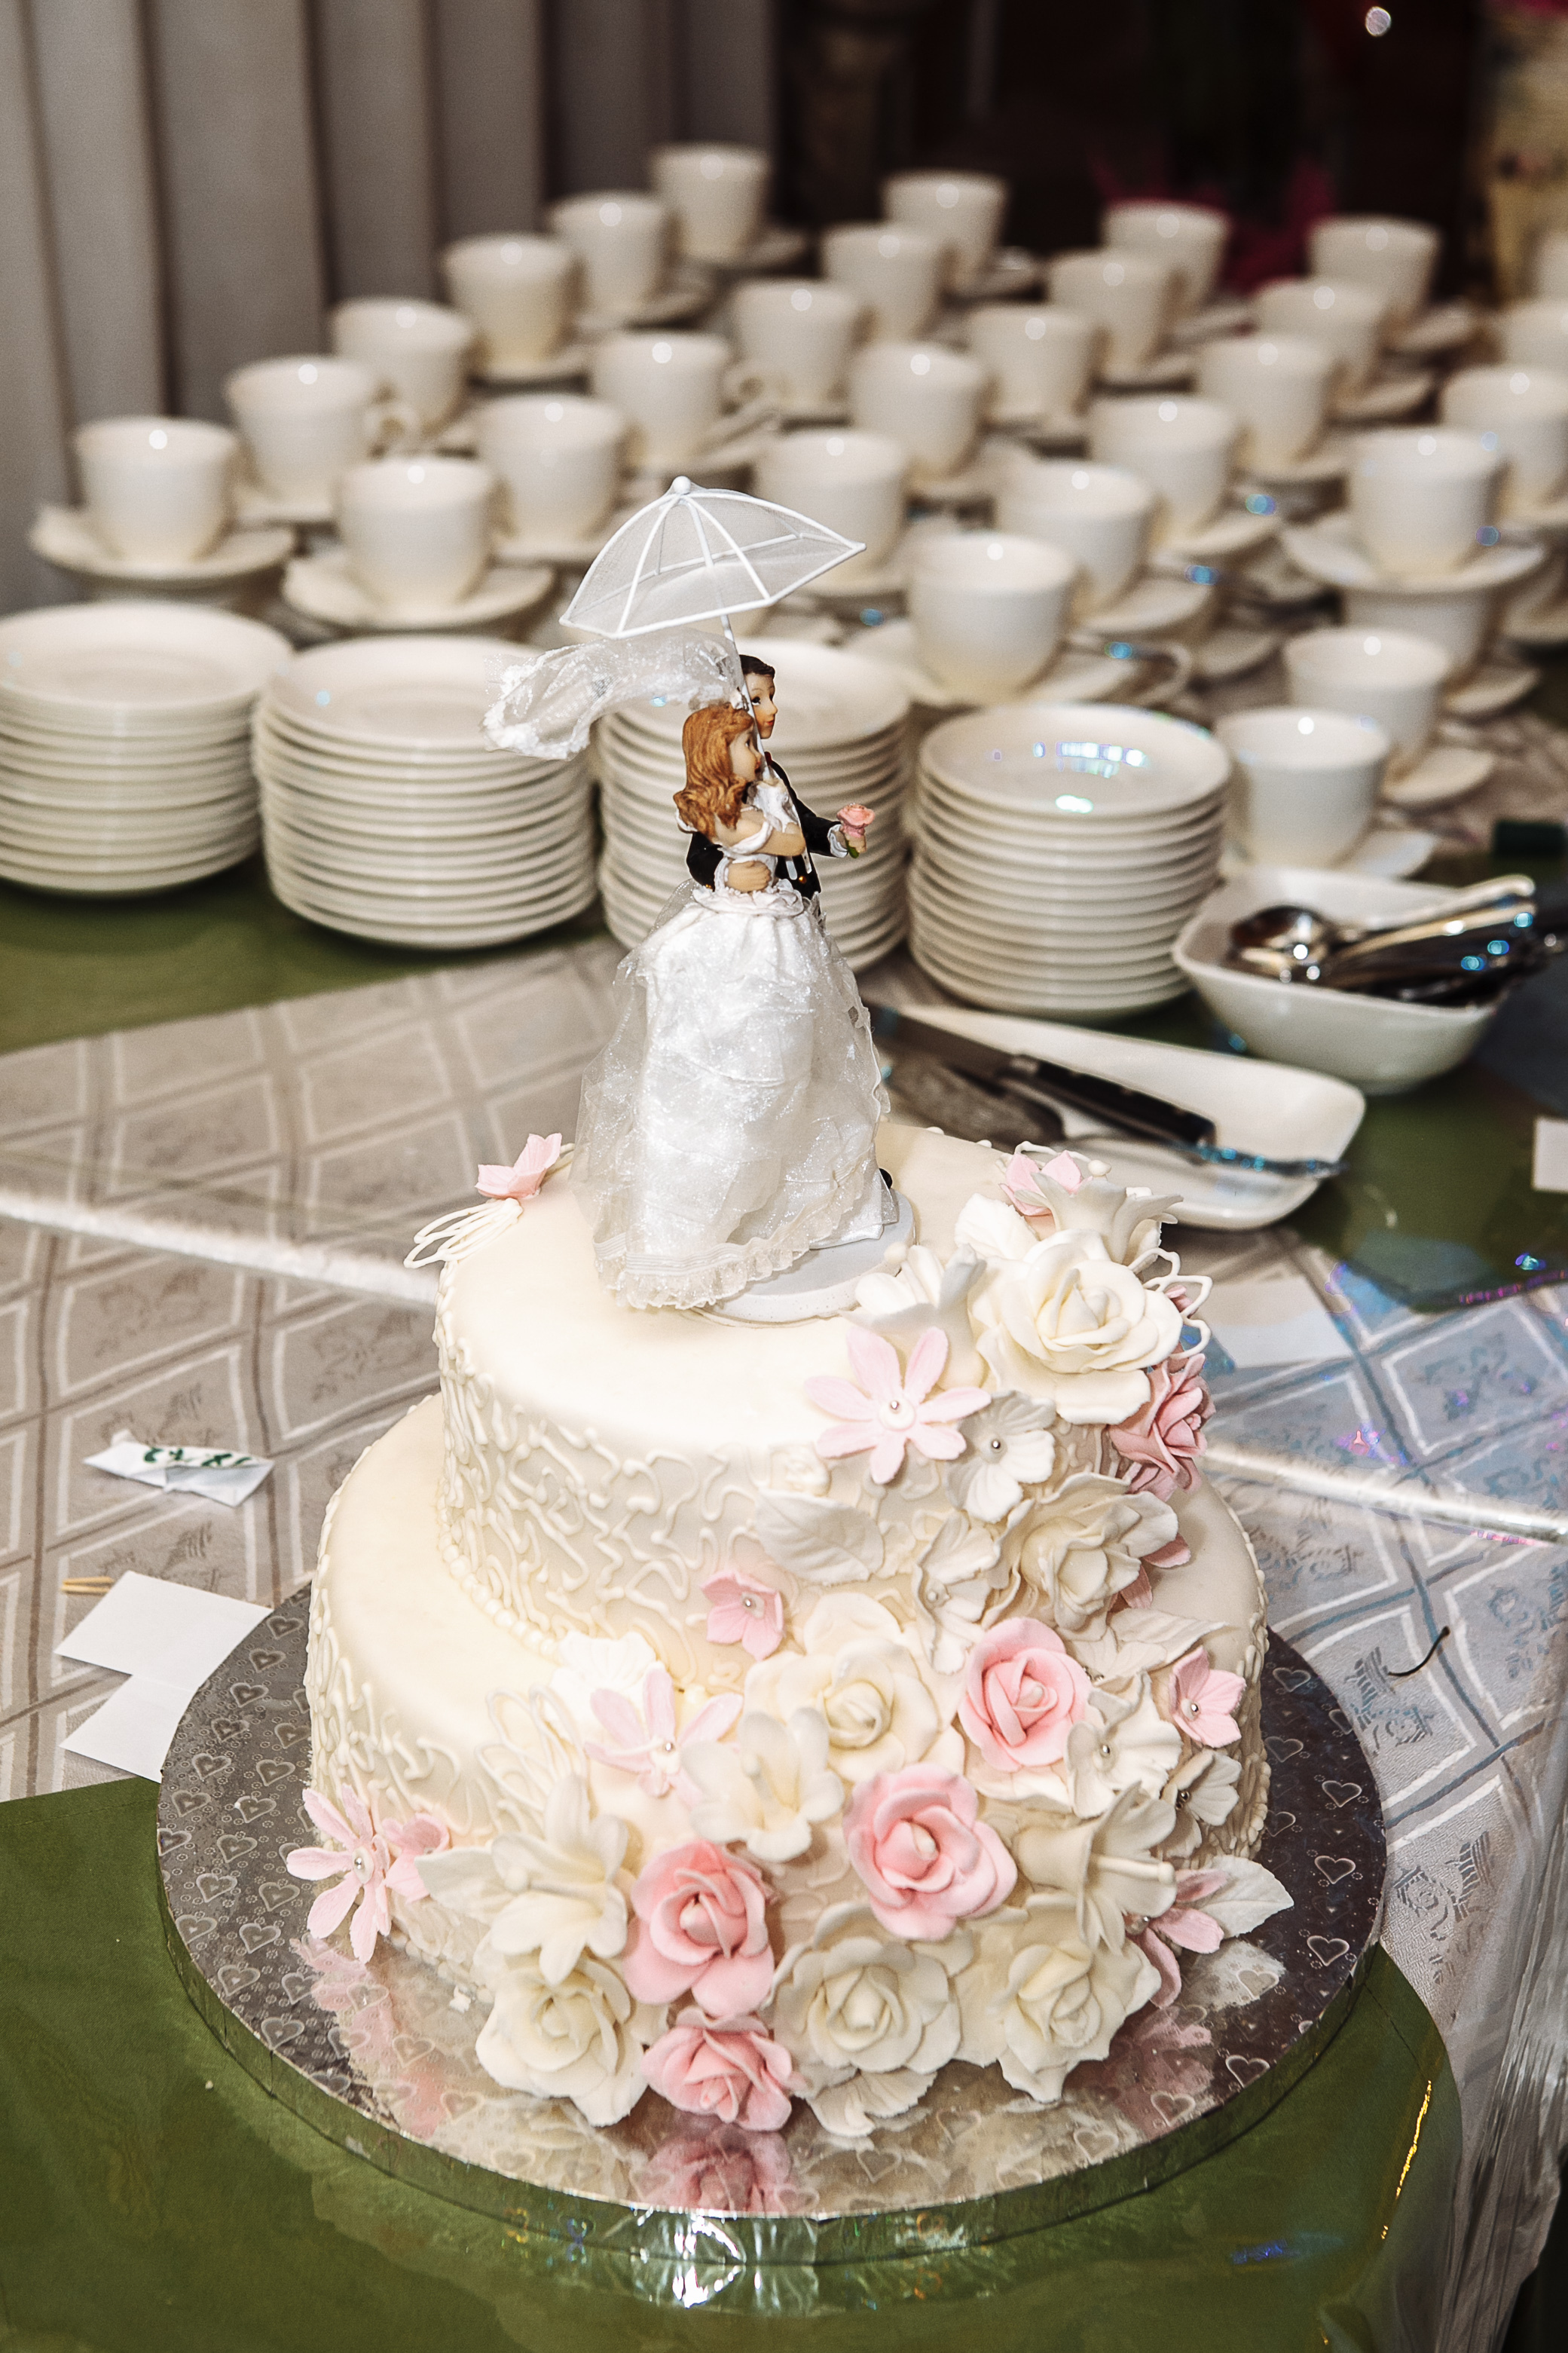 A wedding cake | Source: Shutterstock